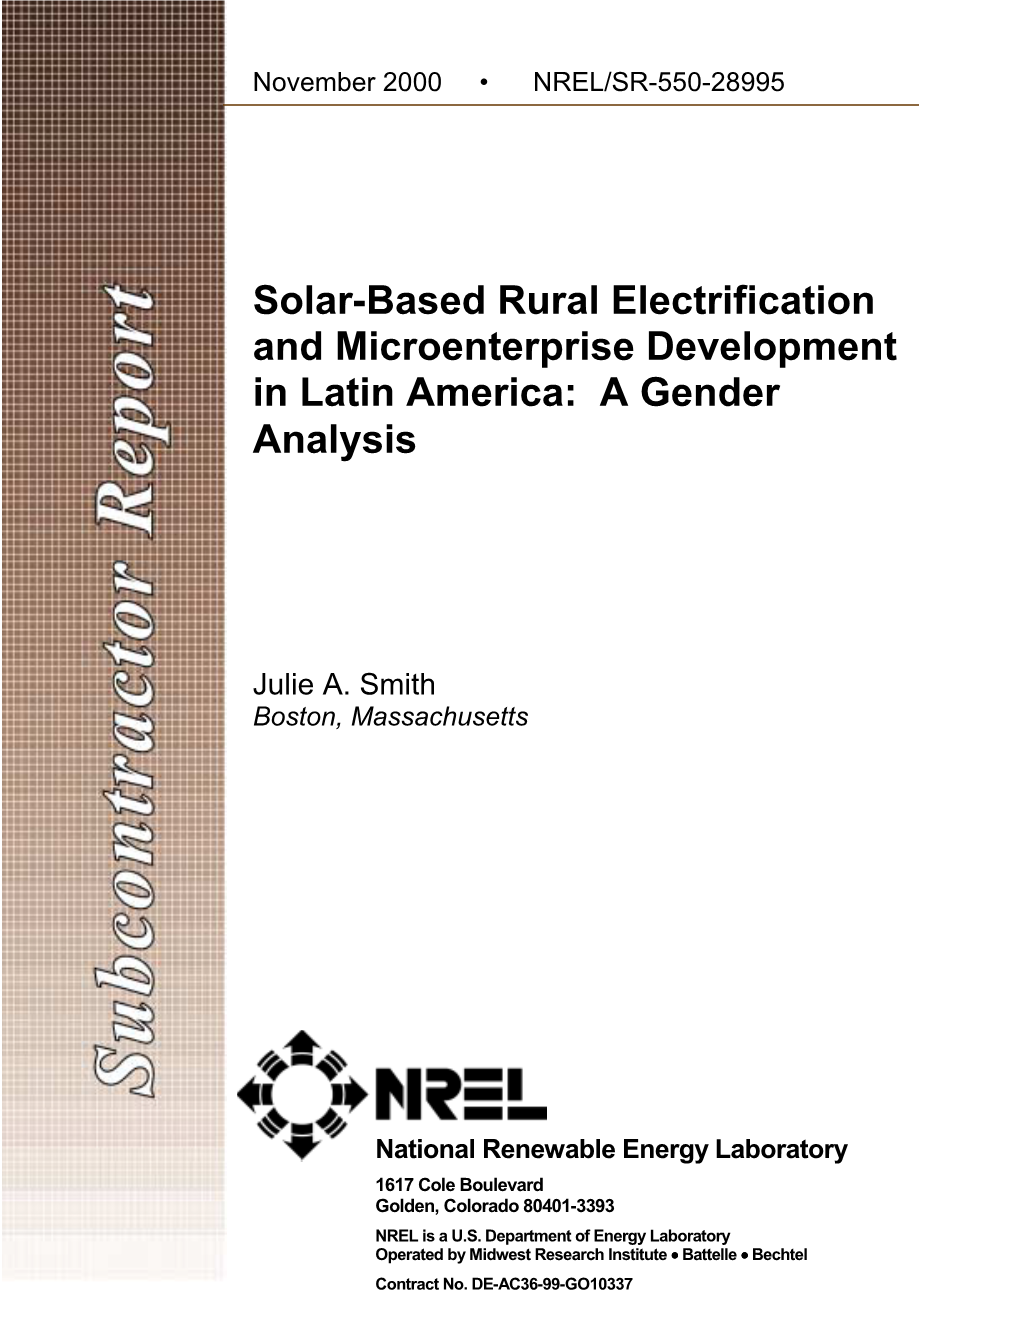 Solar-Based Rural Electrification and Micro-Enterprise